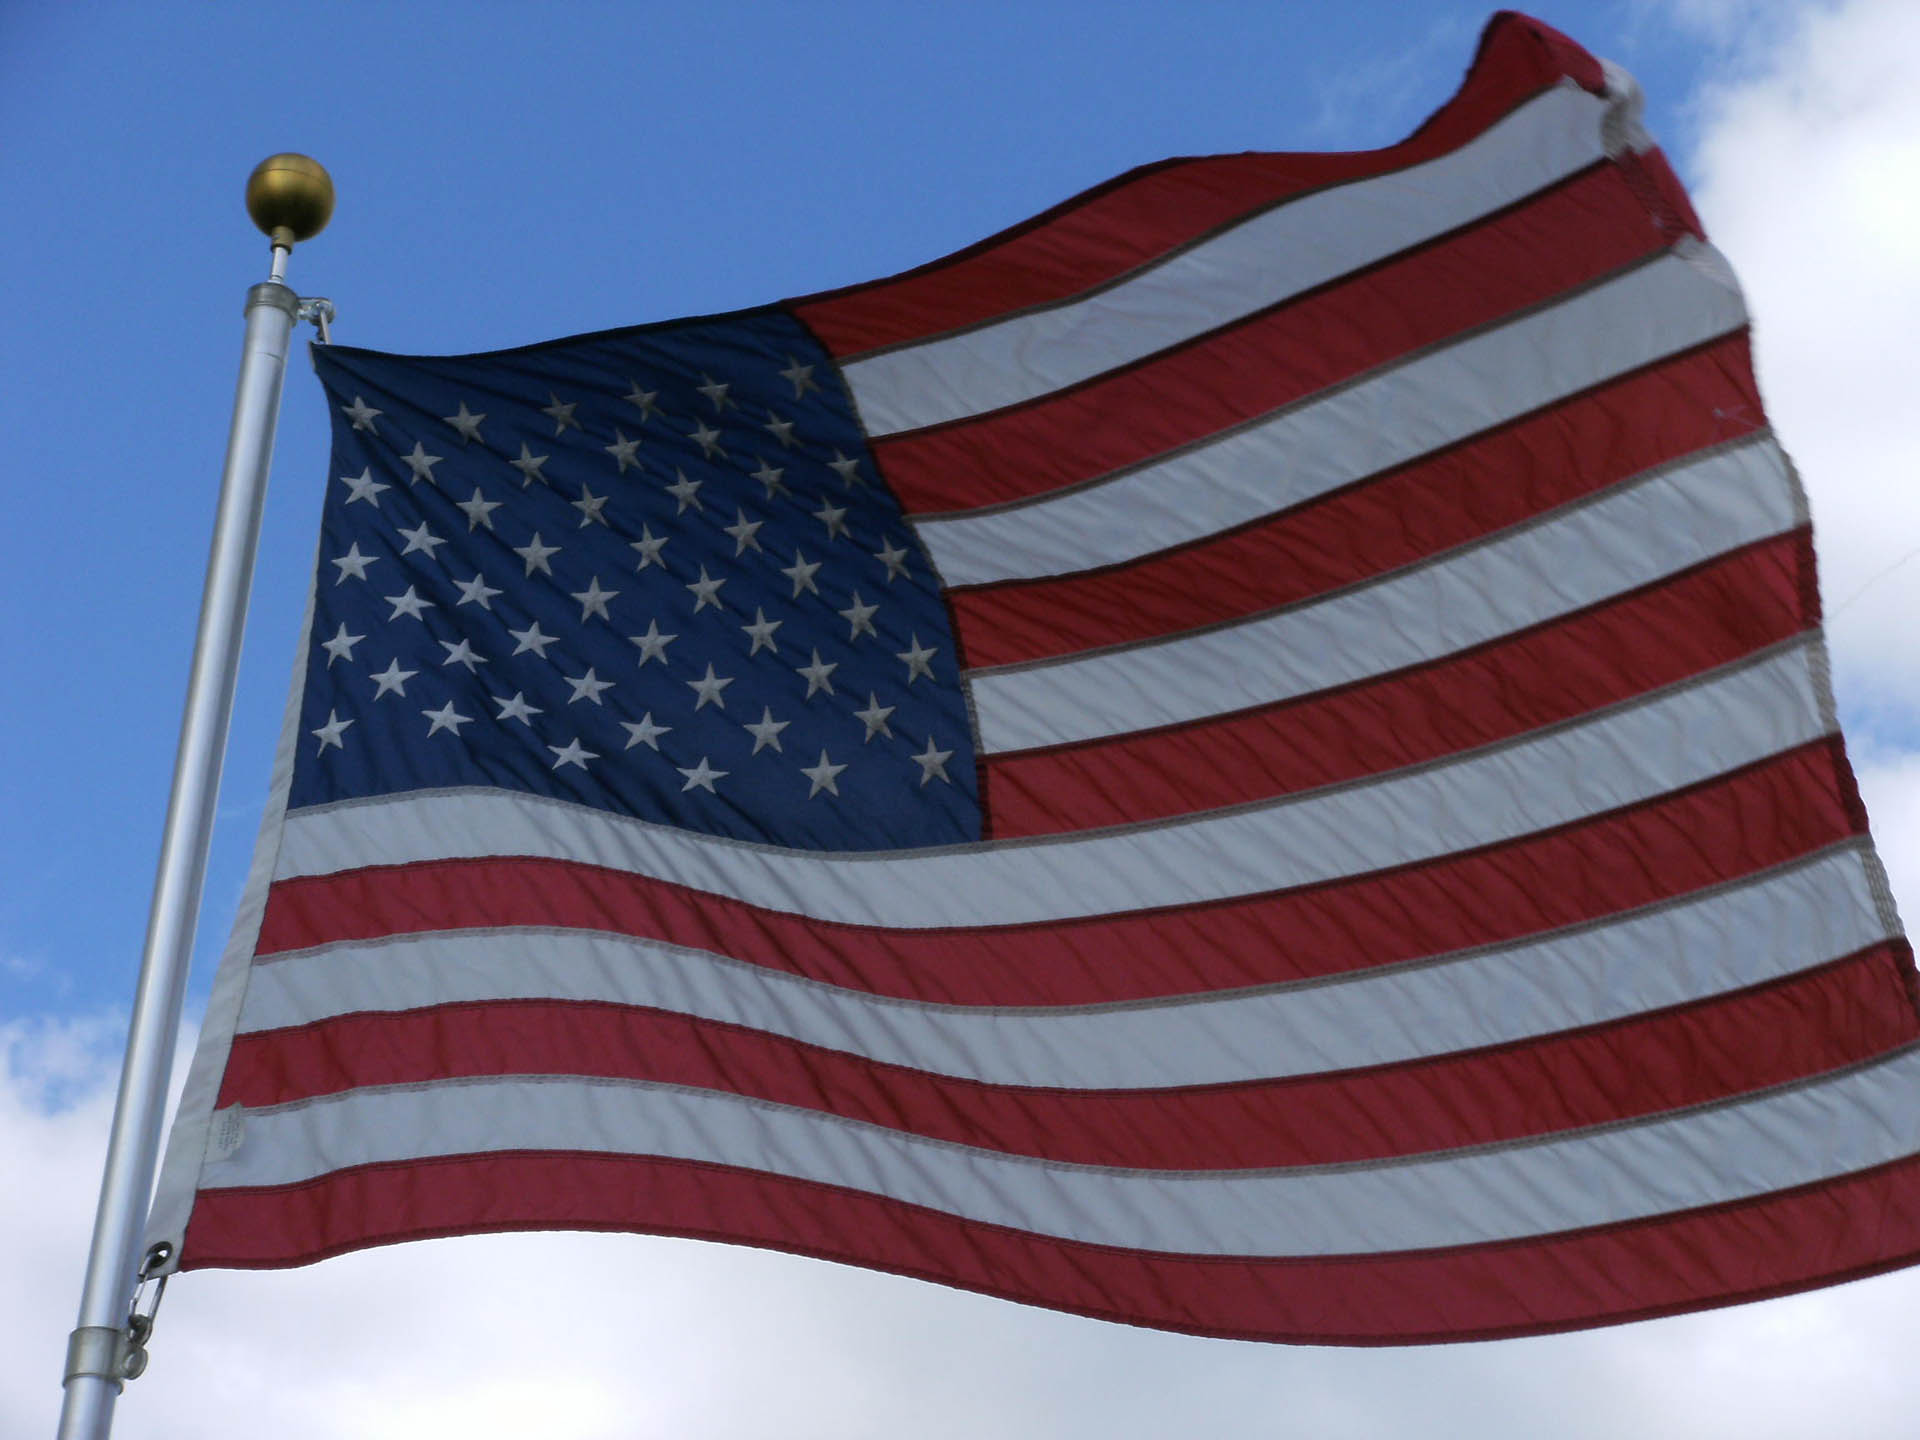 American Flag Wallpaper For Desktop In Full HD Daily Background